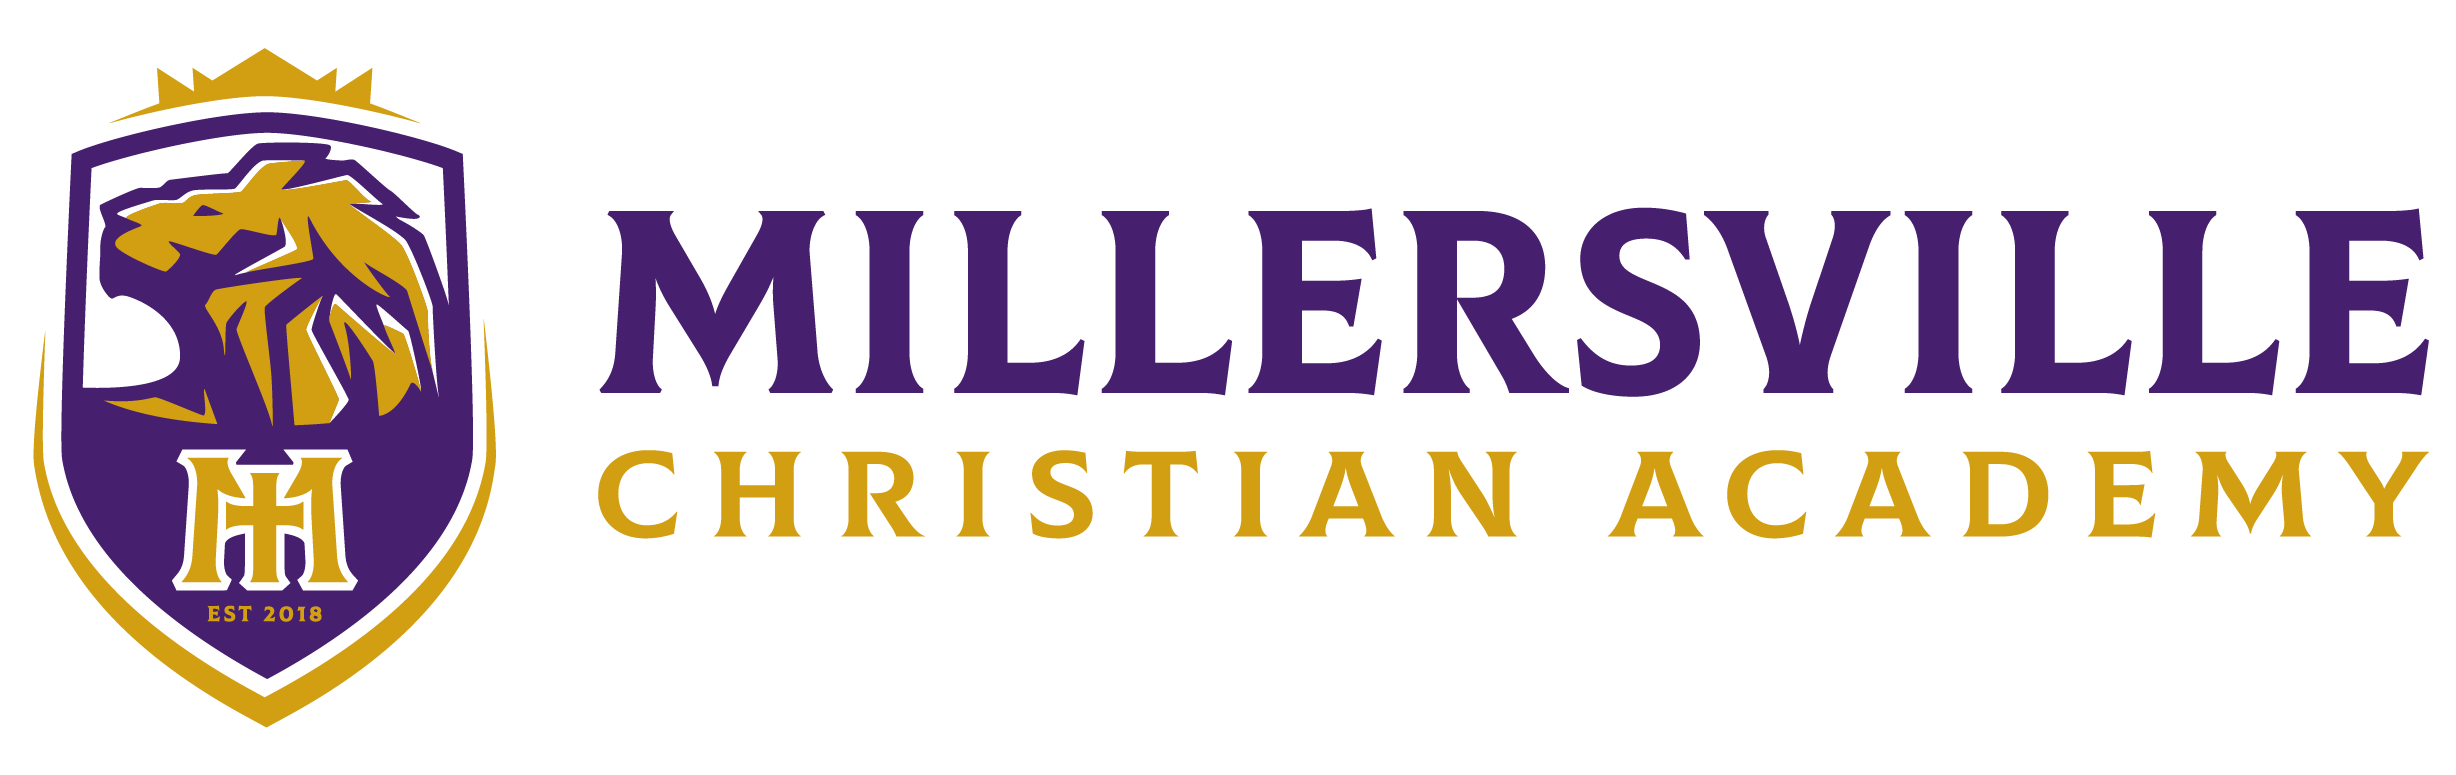 Millersville Christian Academy